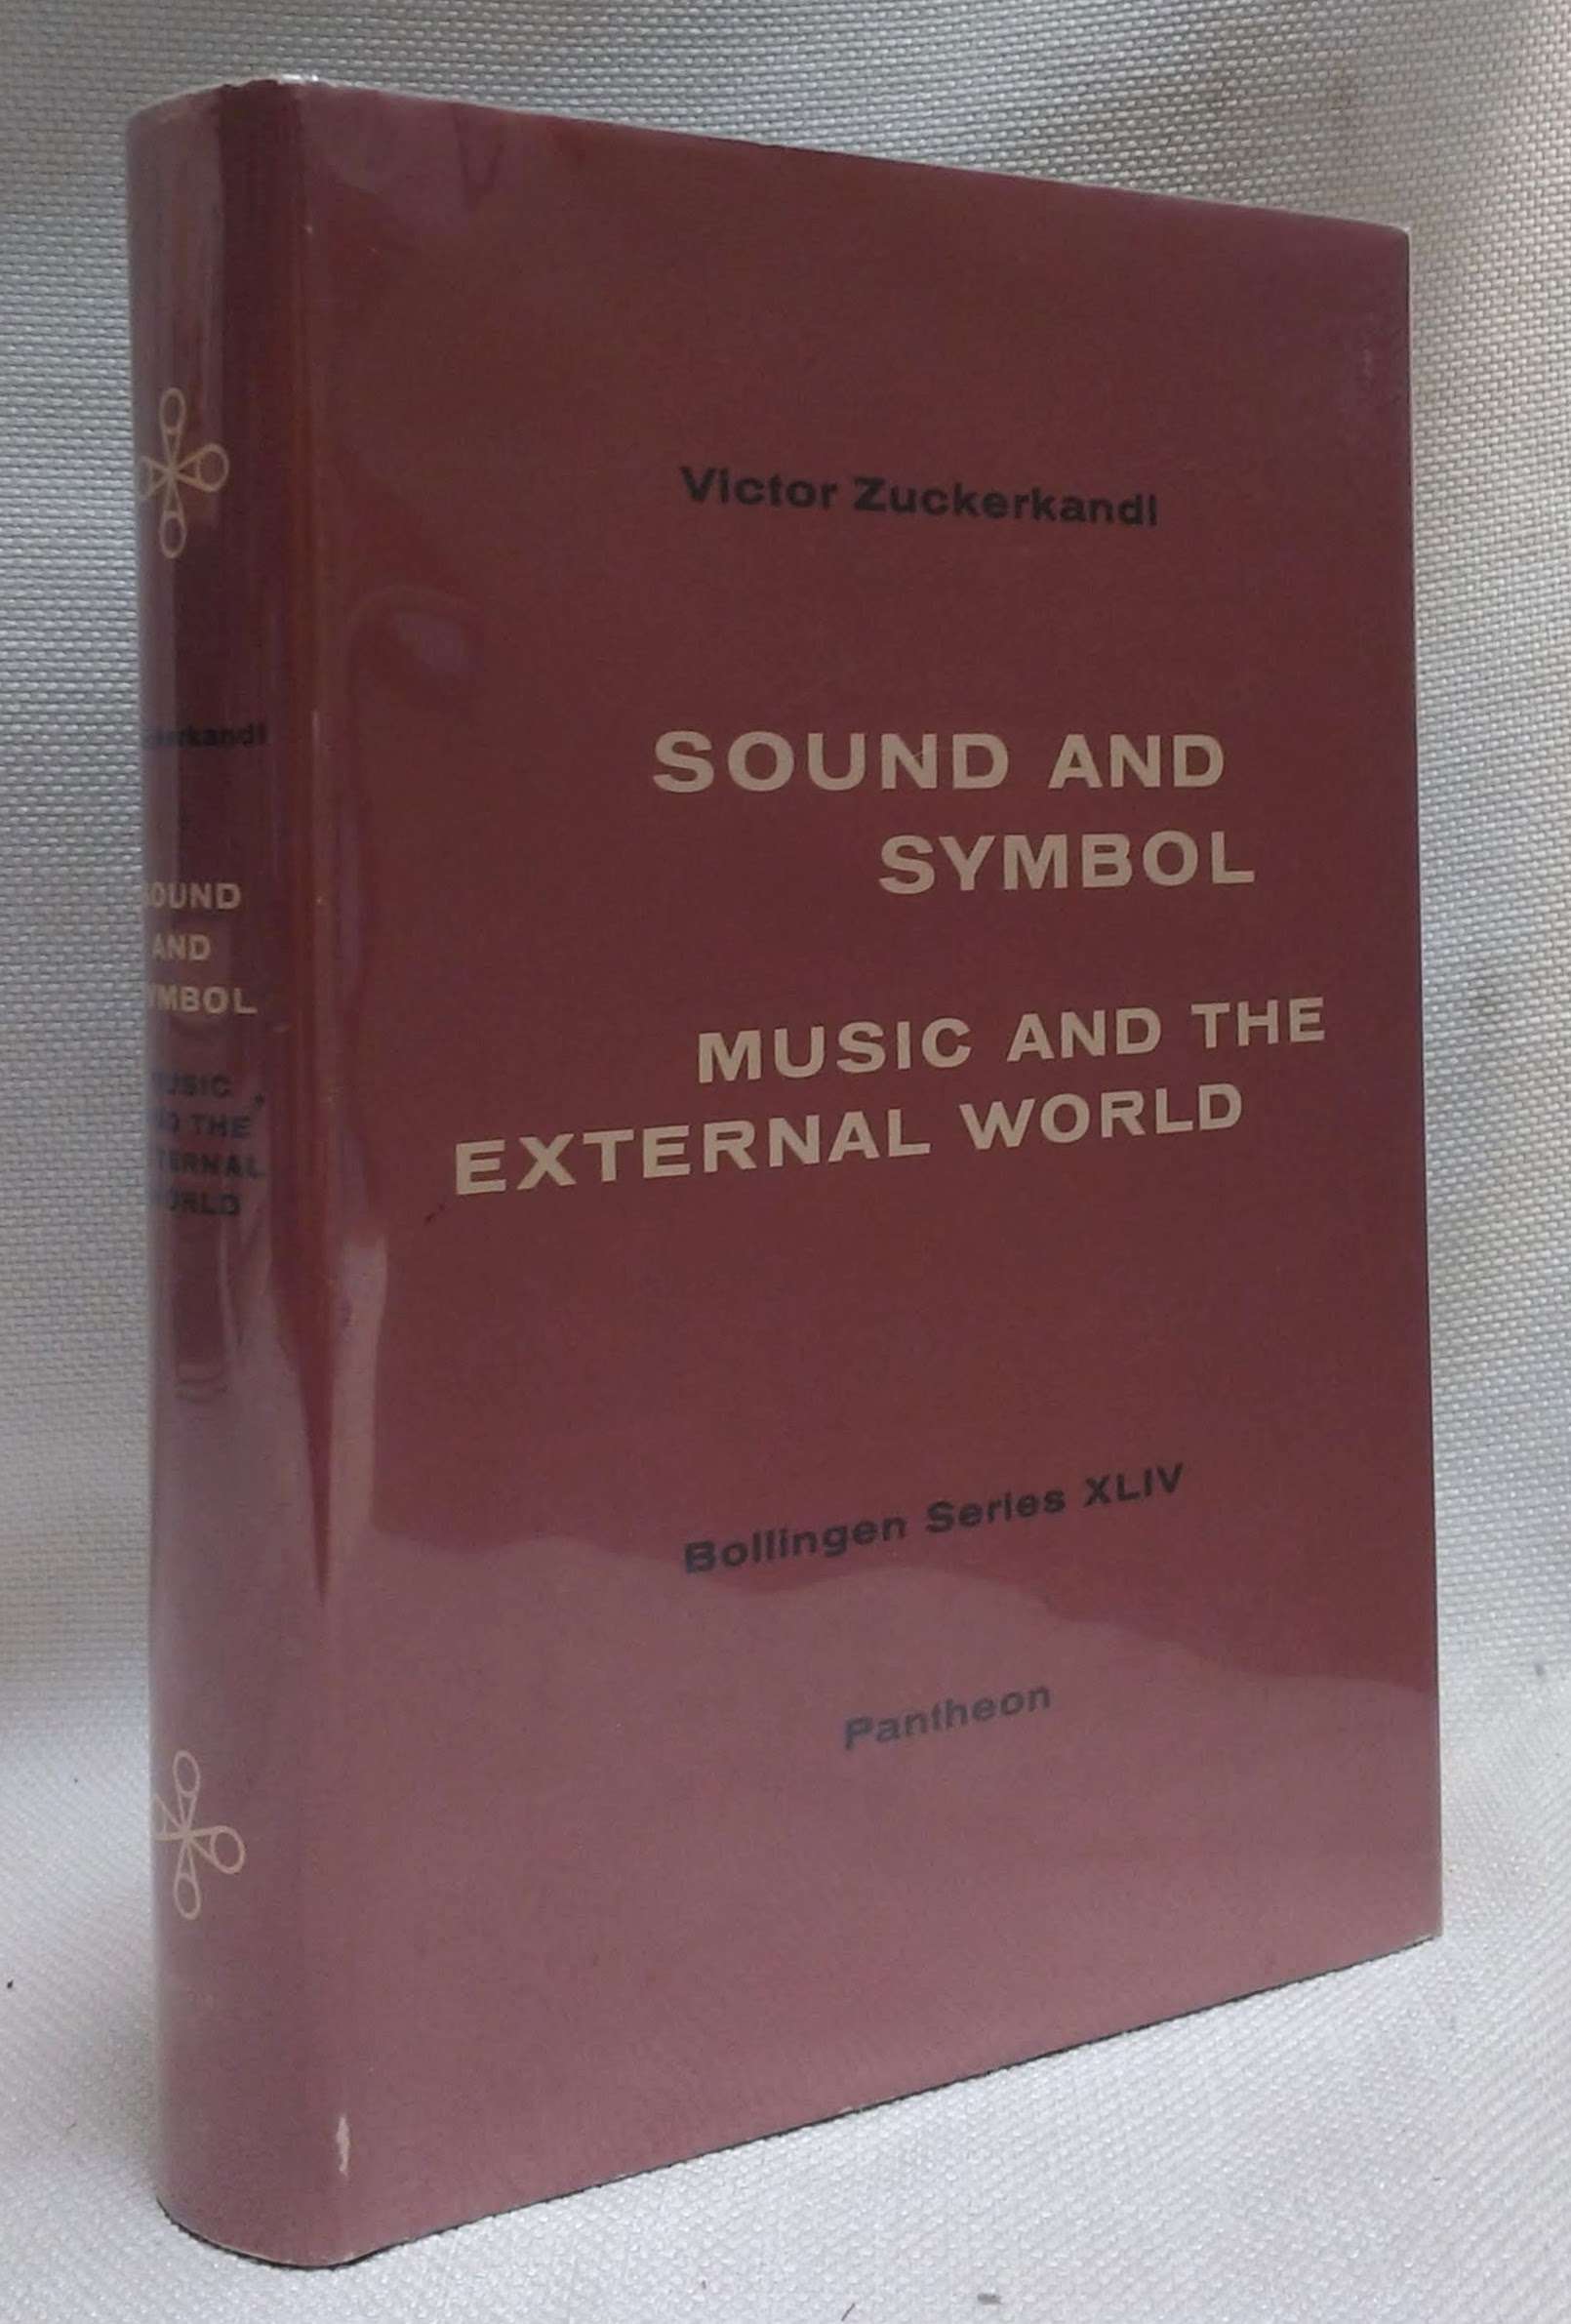 Sound and Symbol / Music and the External World (Bollingen Series XLIV) - Zuckerkandl, Victor; Trask, Willard R. [Translator]